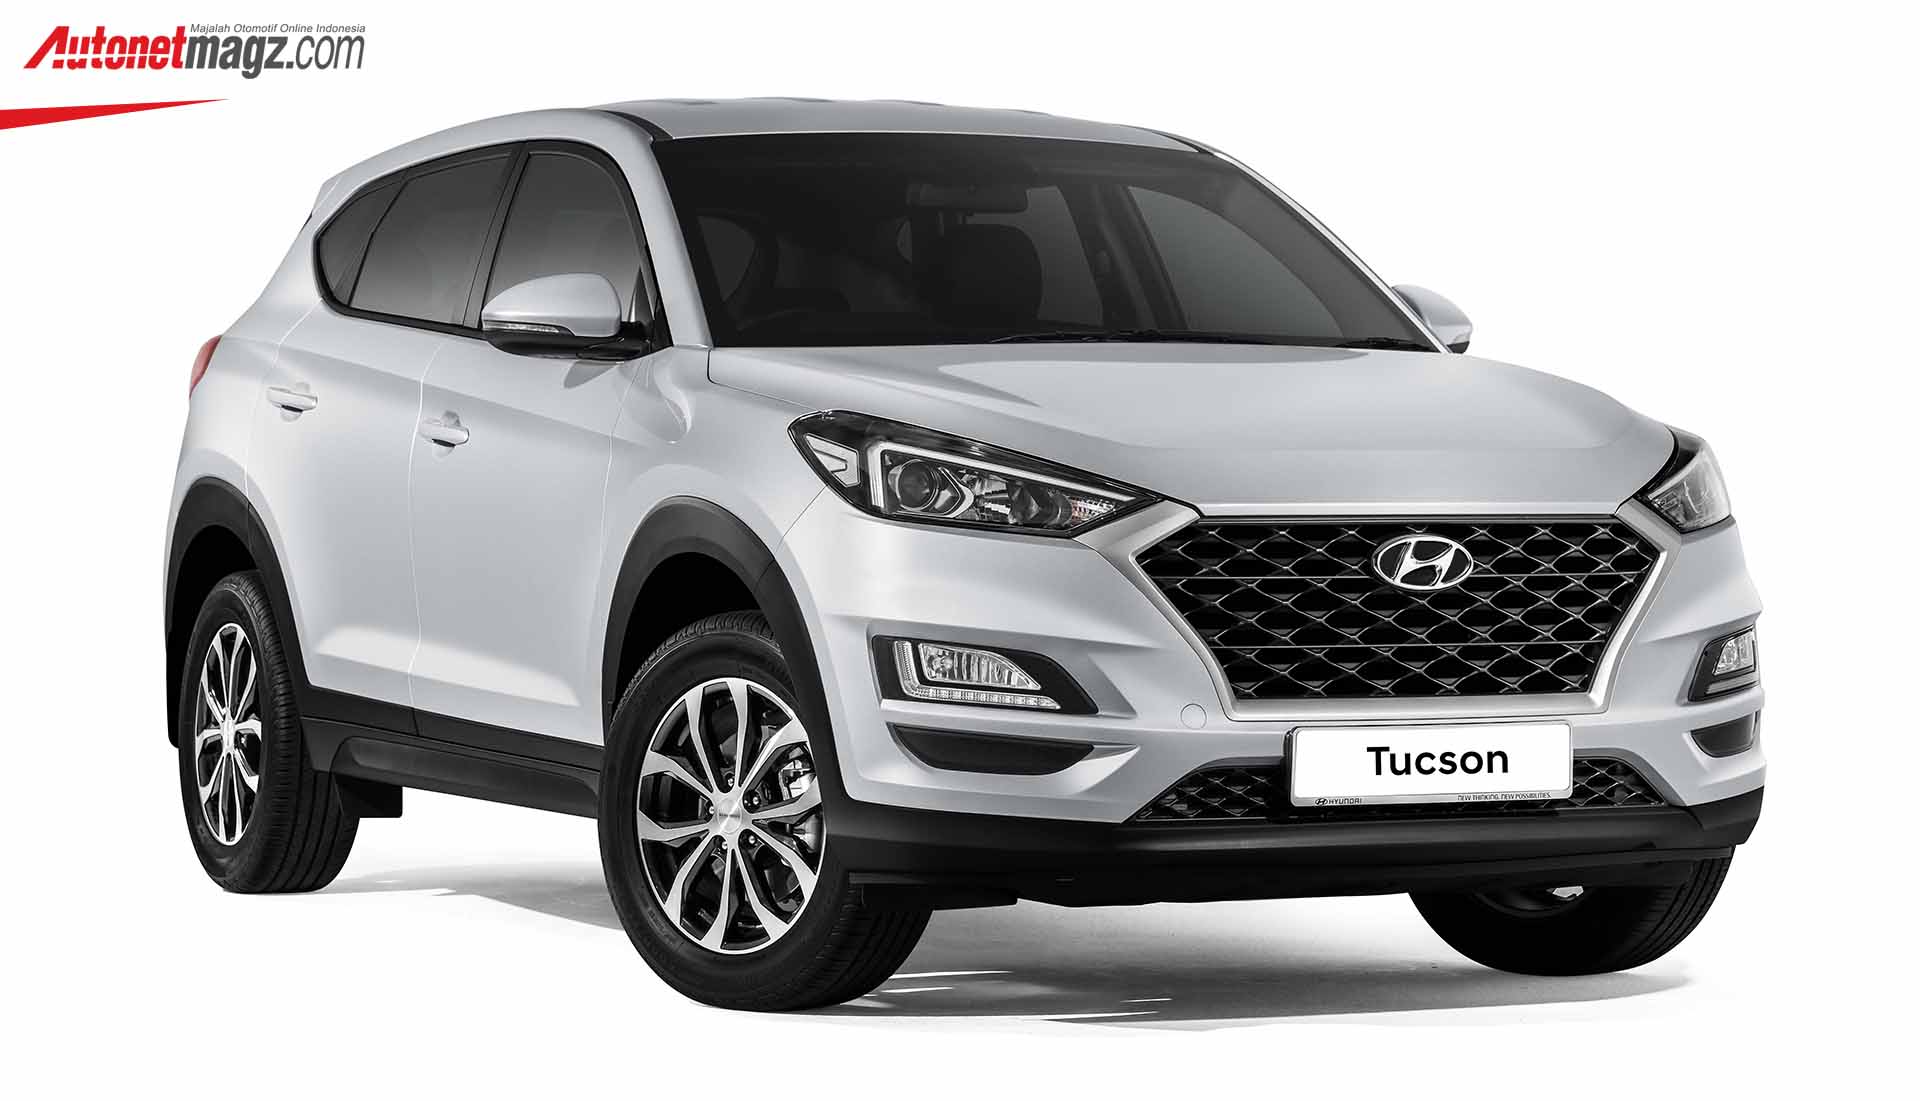 Berita, Spesifikasi Hyundai Tucson Facelift: Hyundai Tucson Facelift Malaysia, Wajah Baru, Tambah Airbags & Sensor